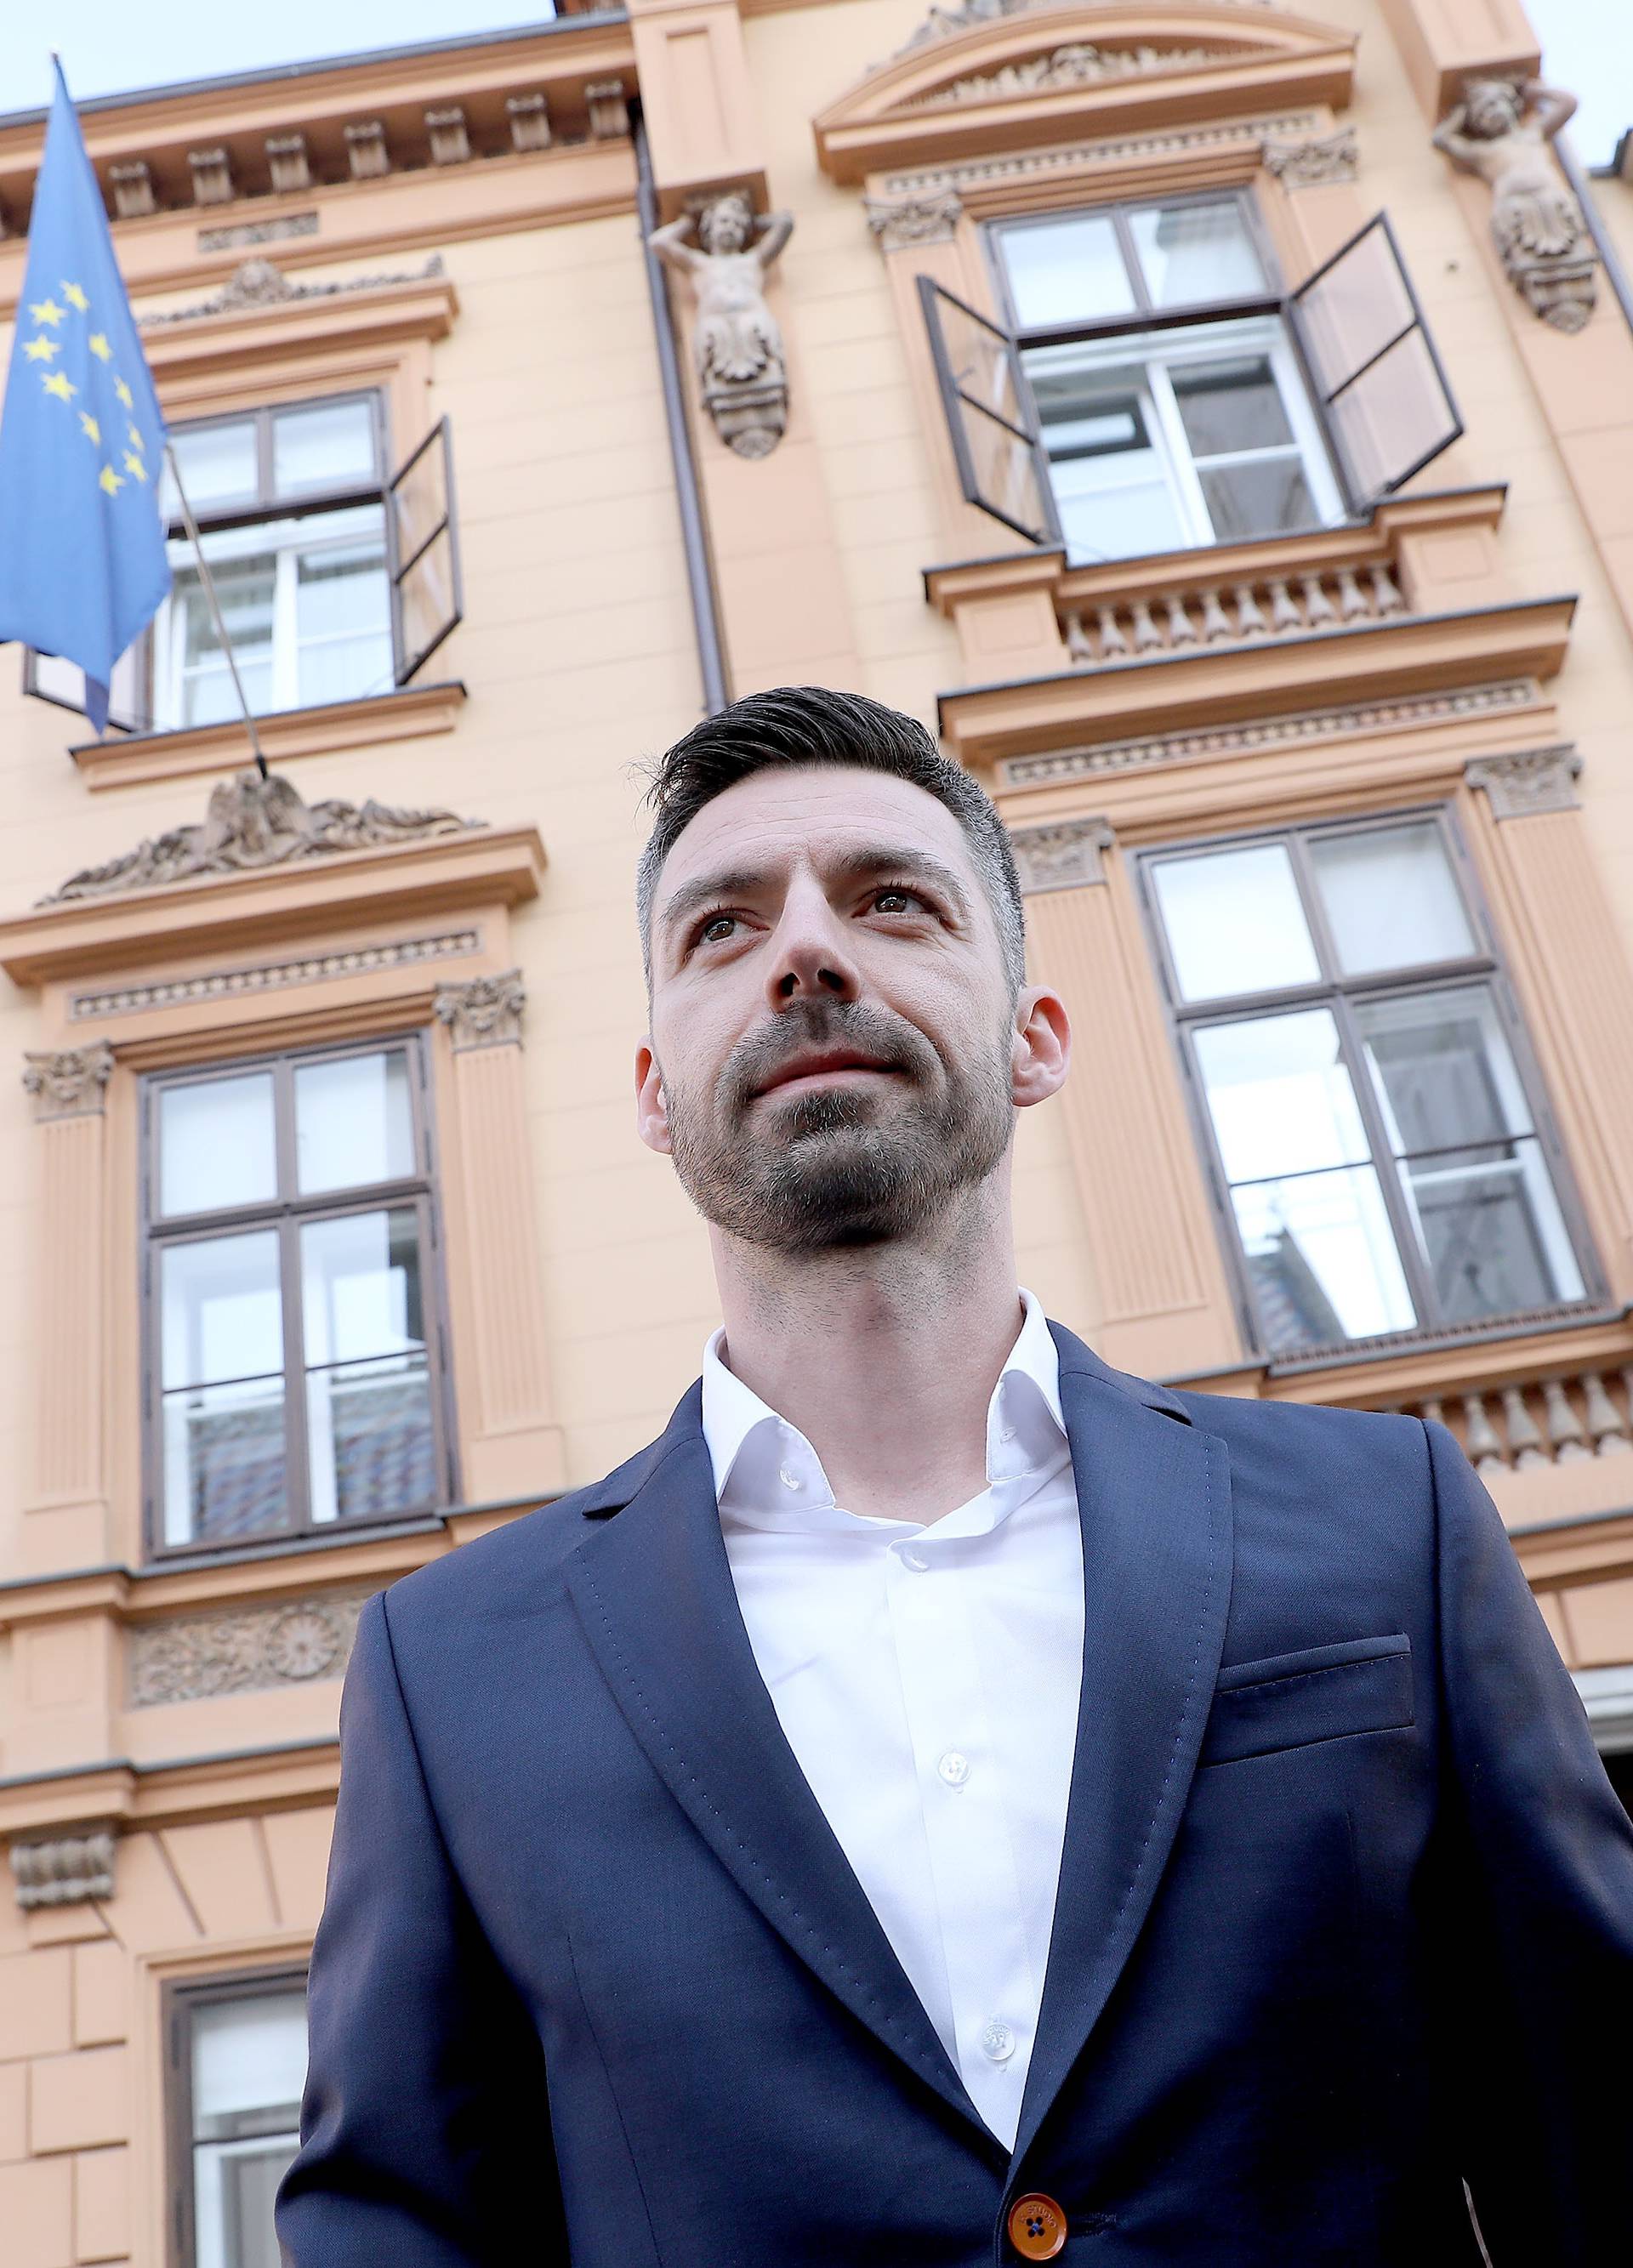 Zagreb: Podnesen zahtjev za ocjenu ustavnosti Zakona o udomiteljstvu